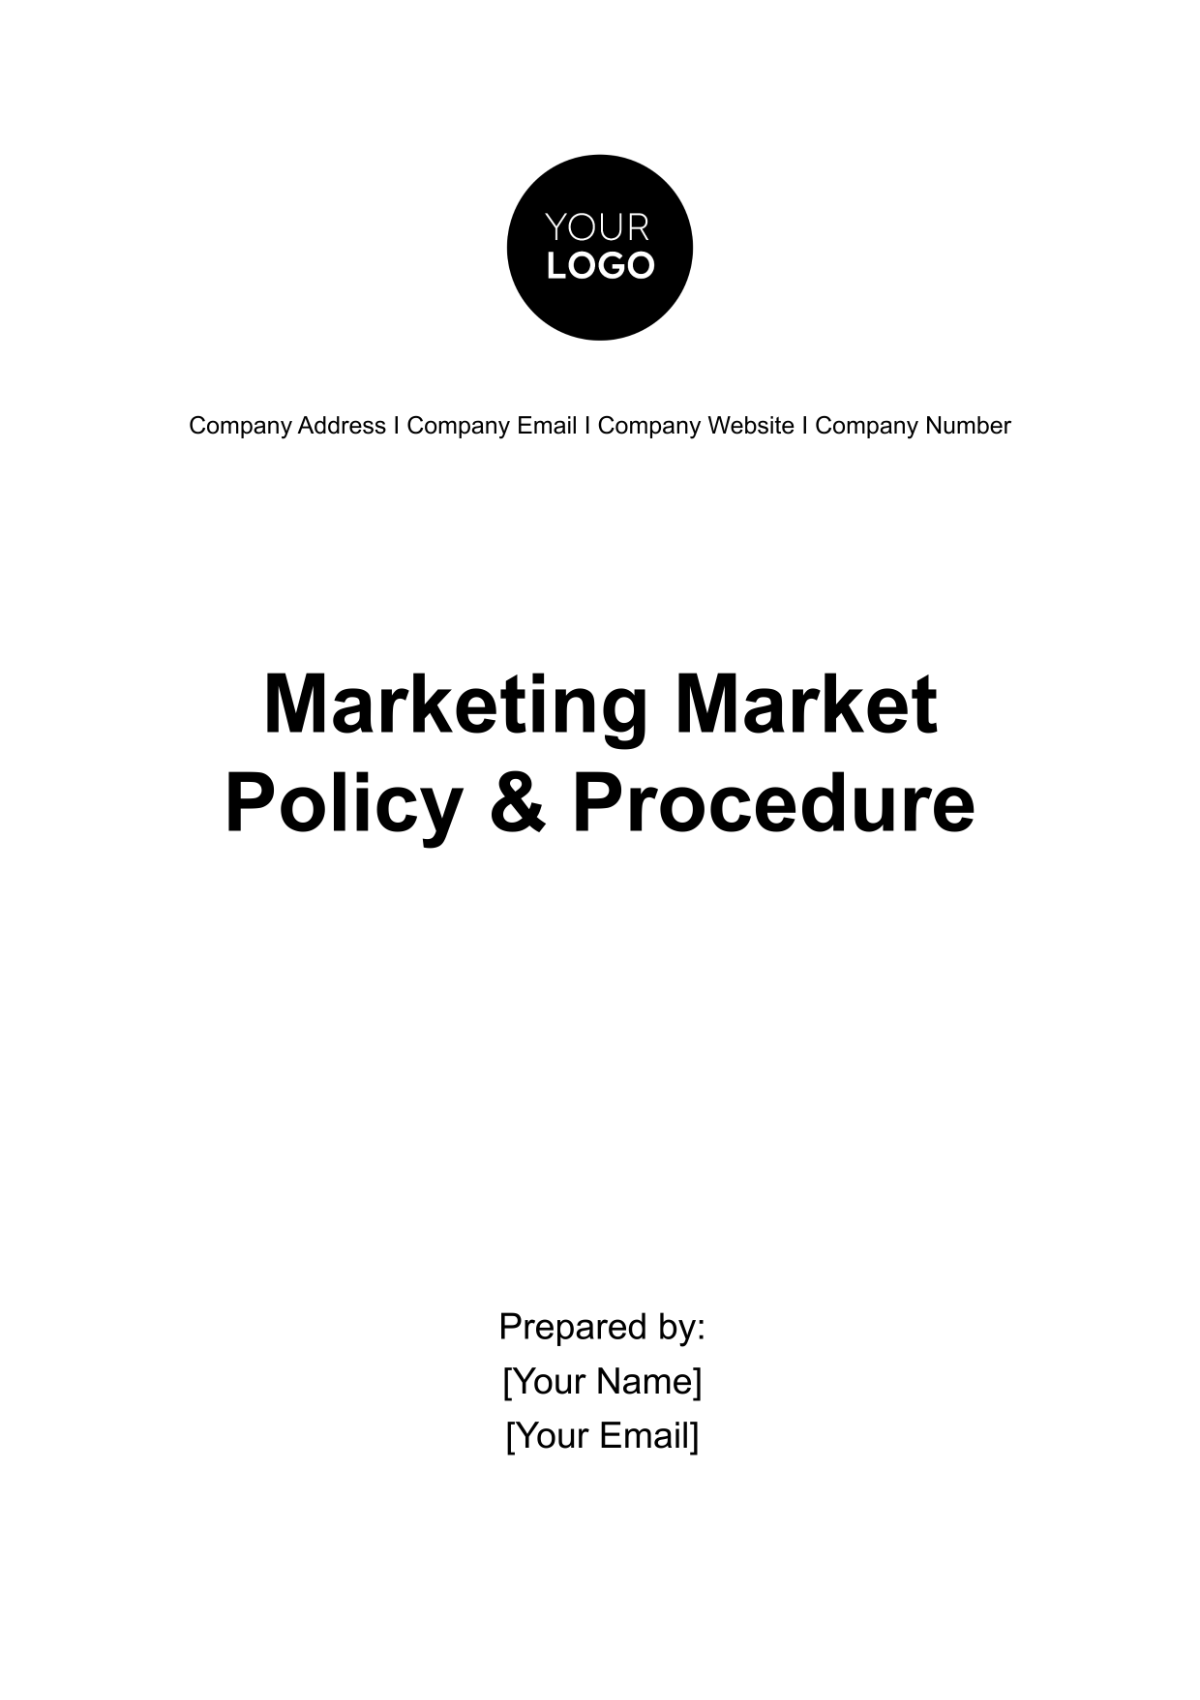 Free Marketing Market Policy & Procedure Template